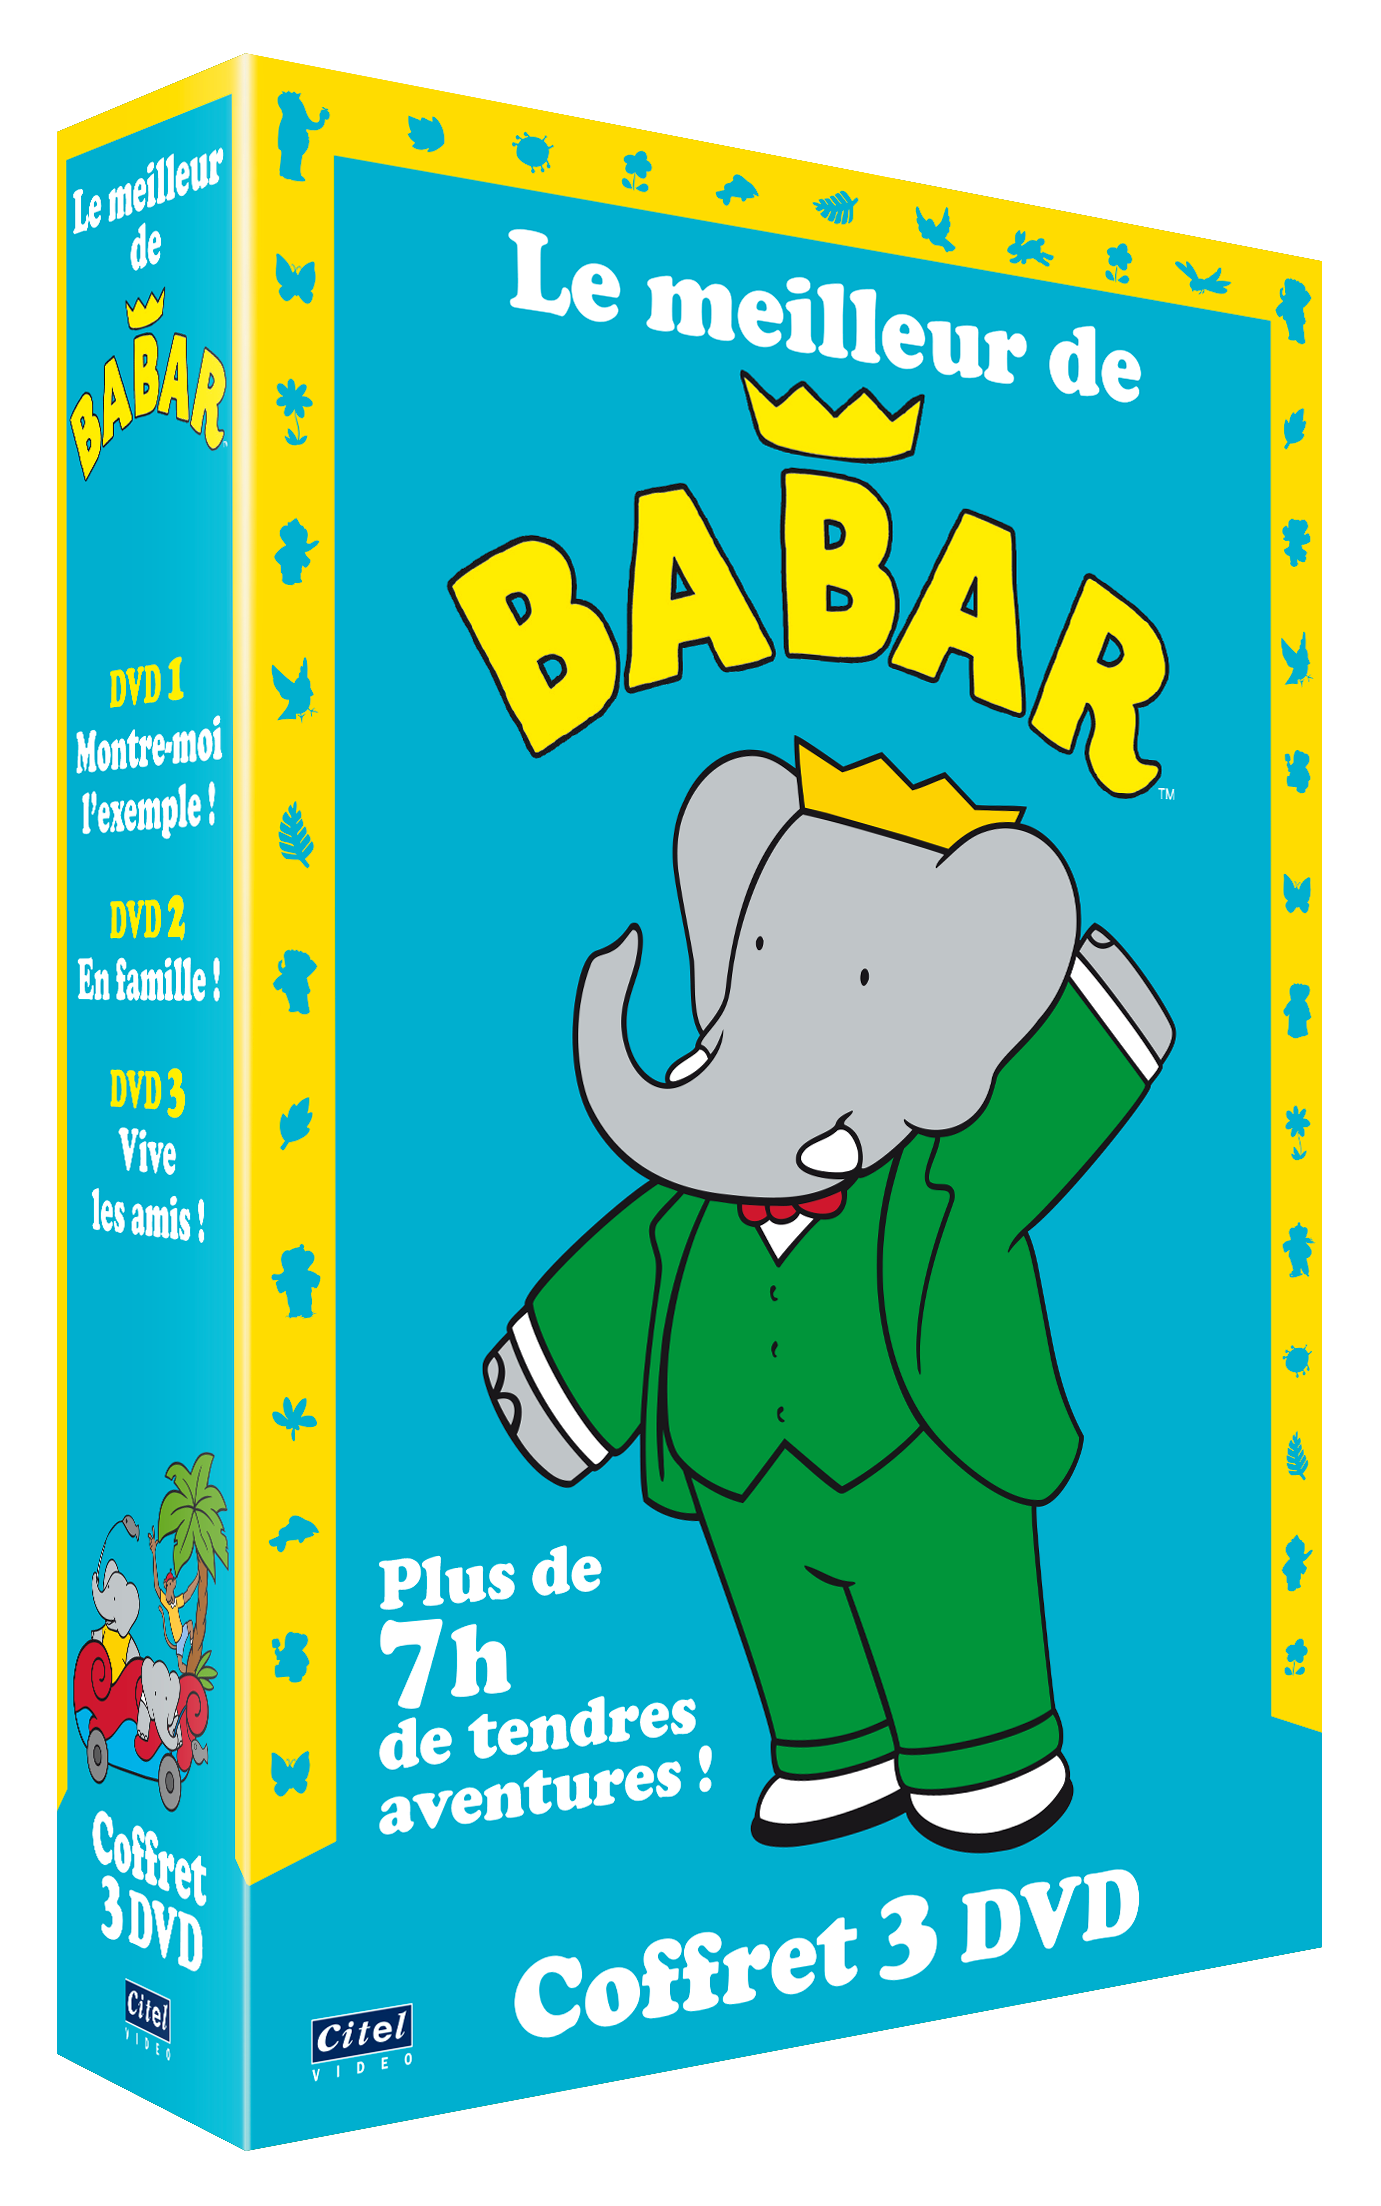 BABAR LE MEILLEUR DE BABAR - COFFRET 3 DVD